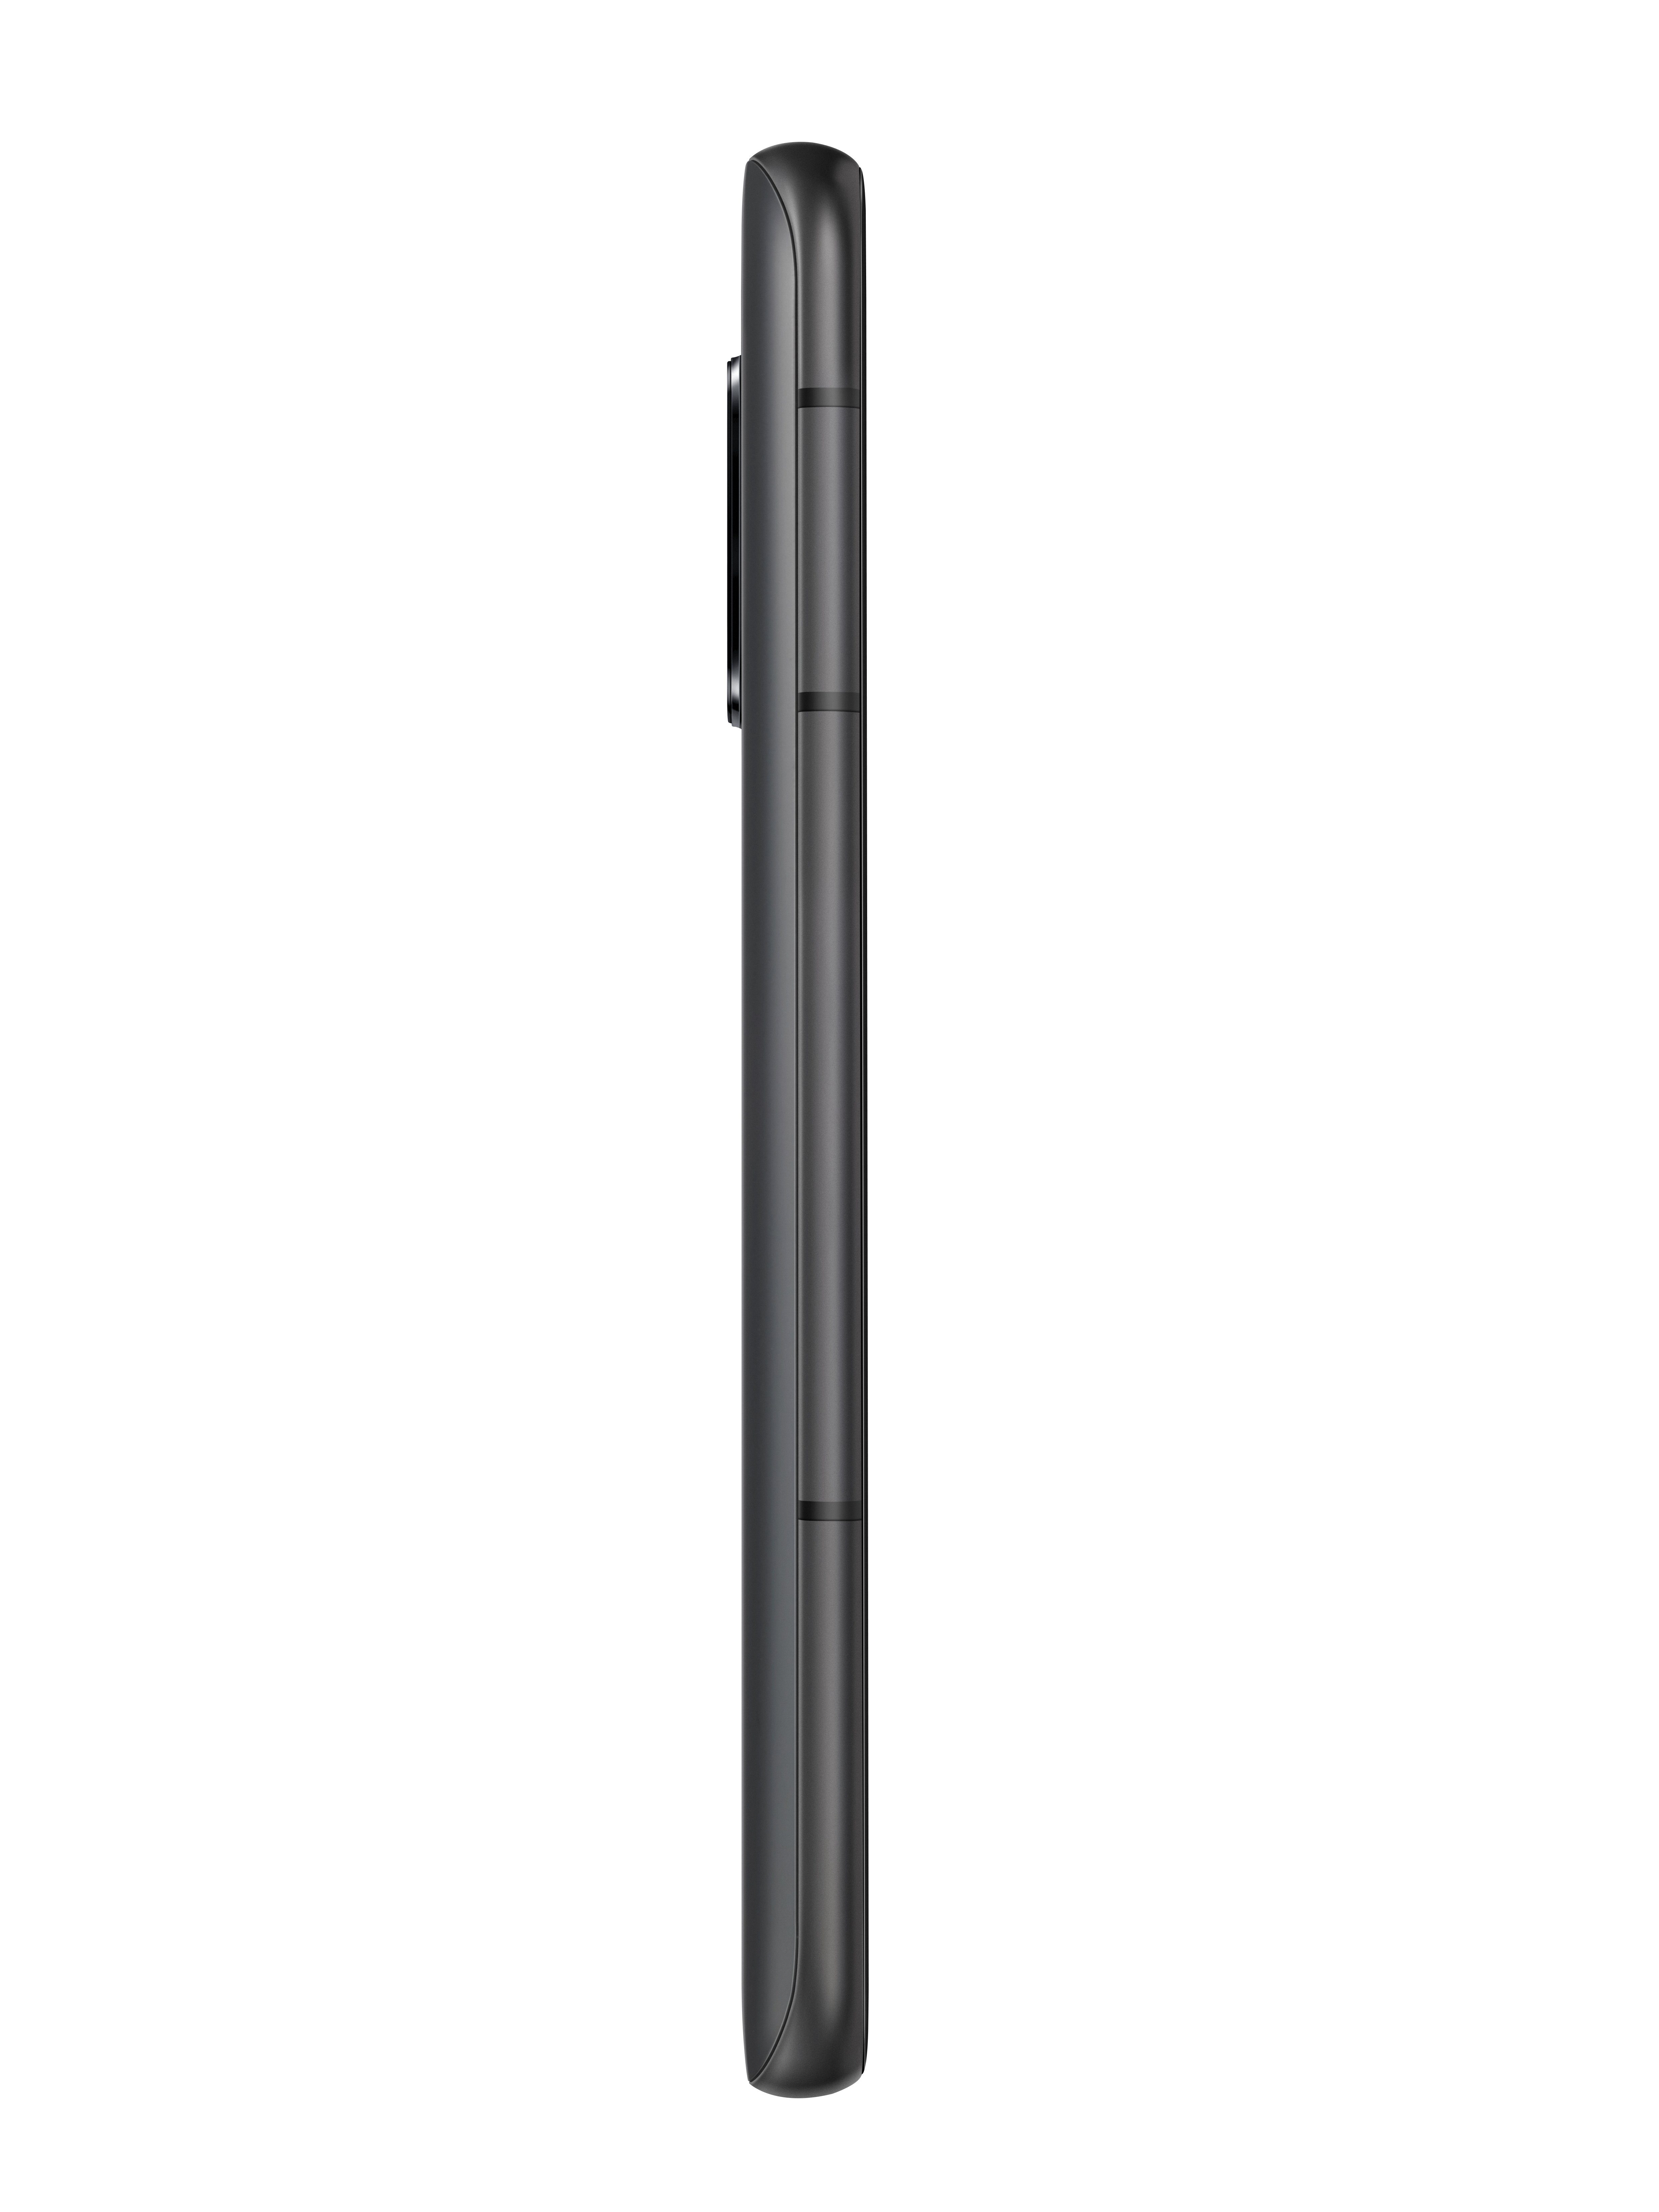 Asus Zenfone 8 Smartphone cm/5,92 GB Kamera) 256 MP Speicherplatz, (15 64 Zoll